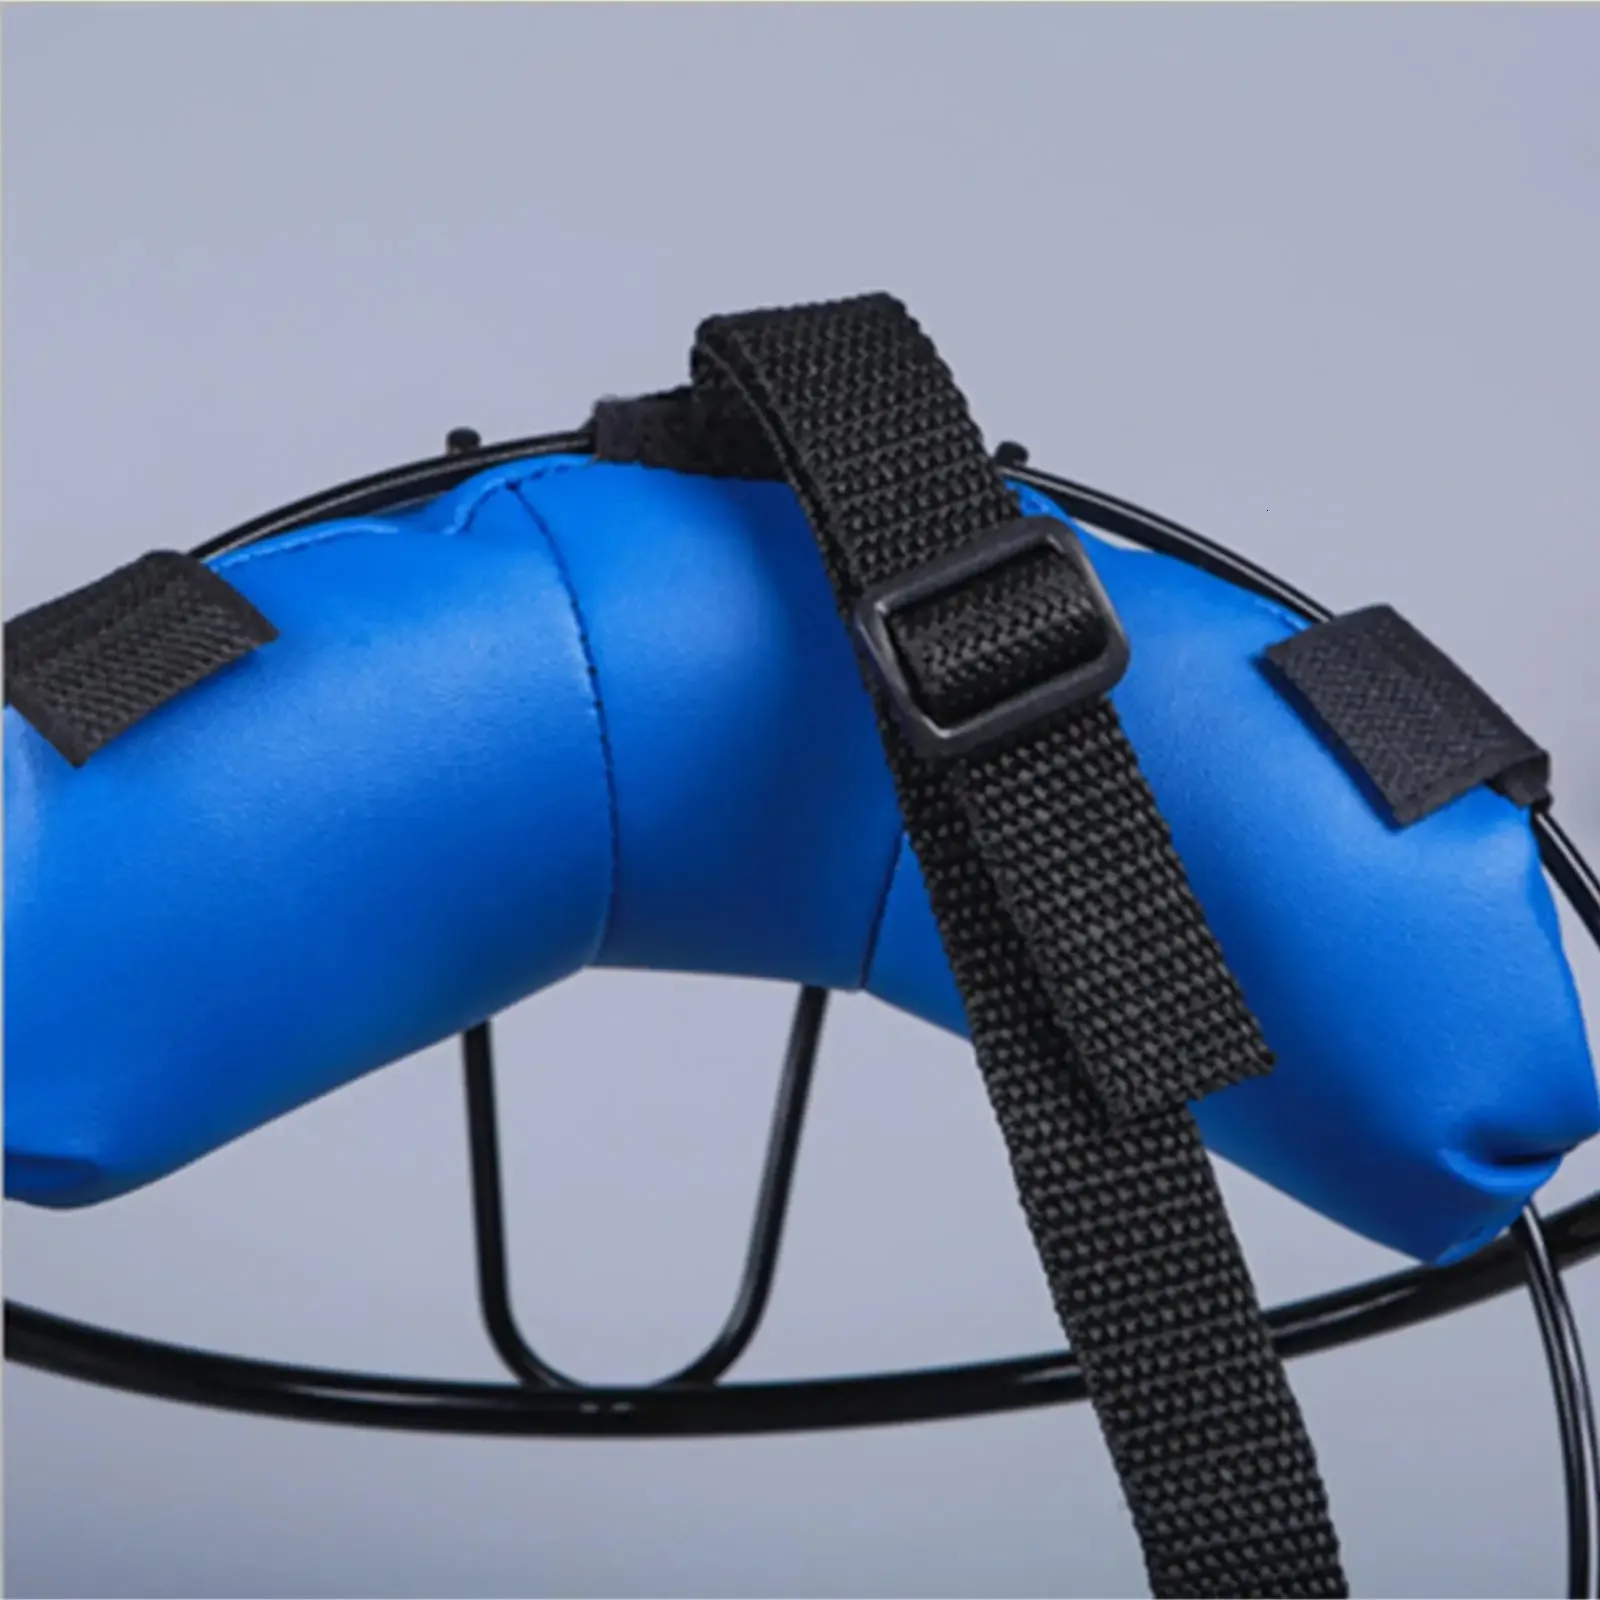 Sports Softball Face Guard Adjustable Baseball Protective Gear Lightweight Alloy Baseball Accessories 31cmx7cm